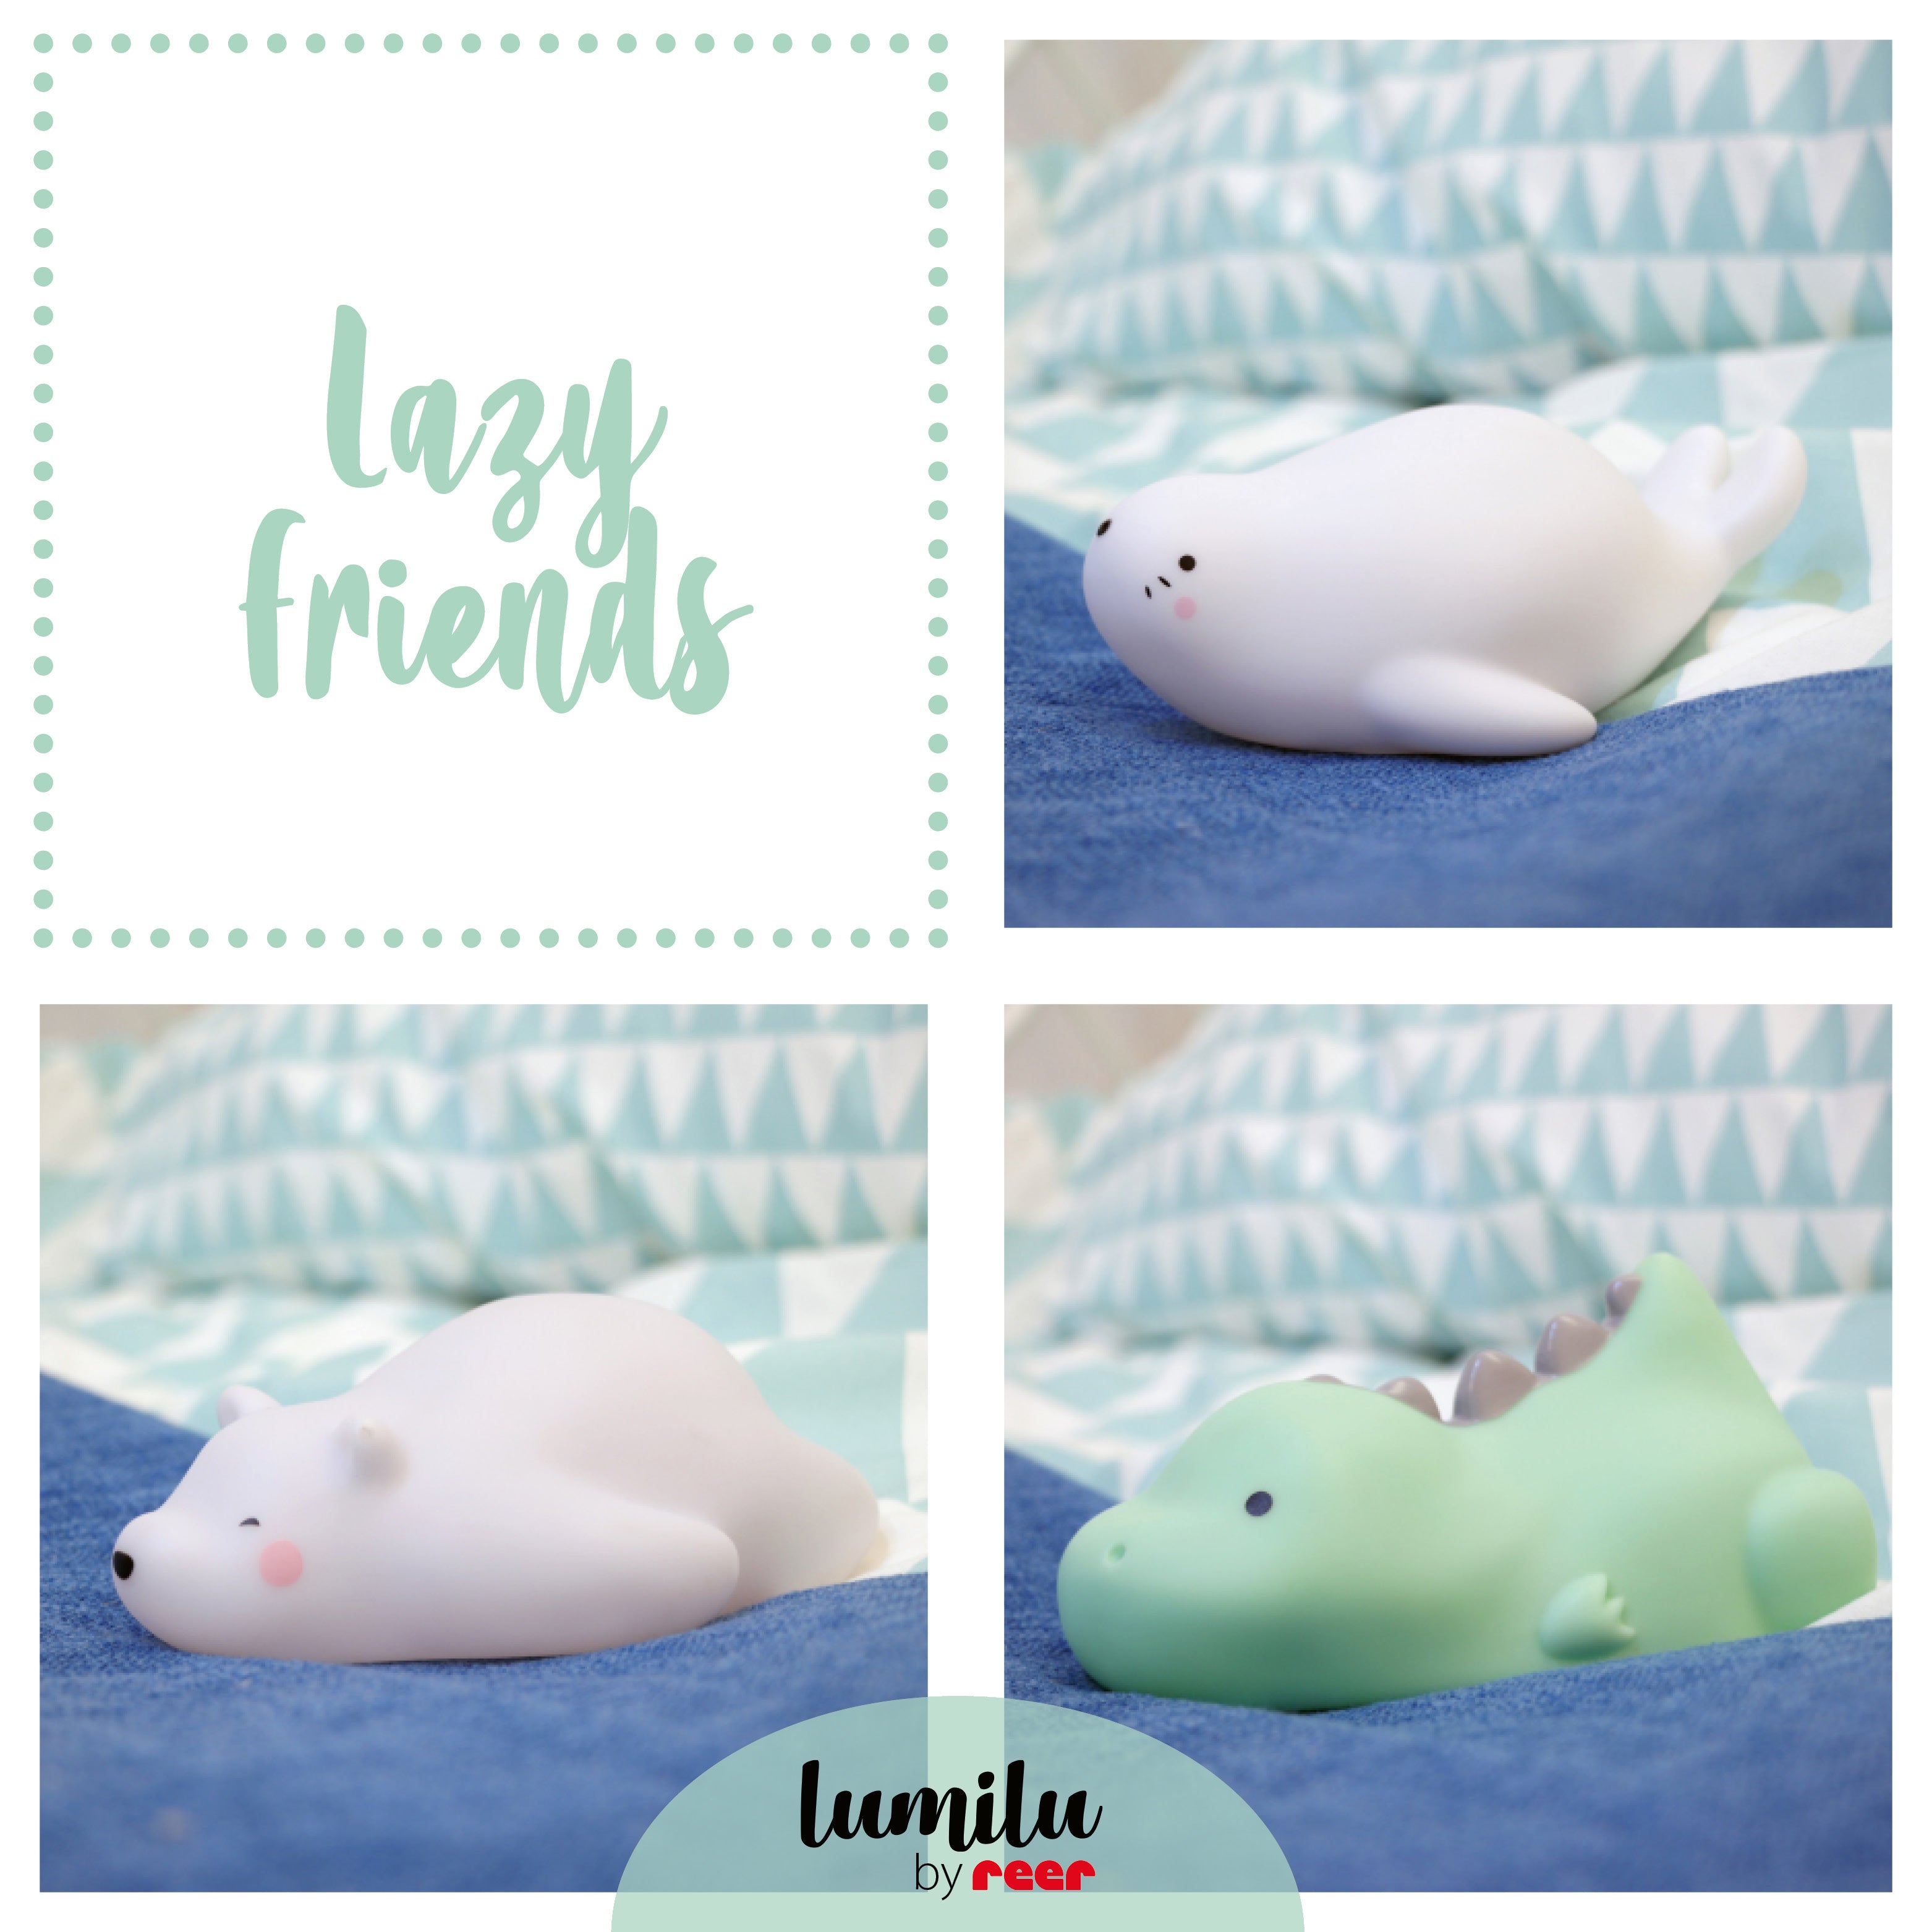 Reer Lumilu Lazy Friends - Seal